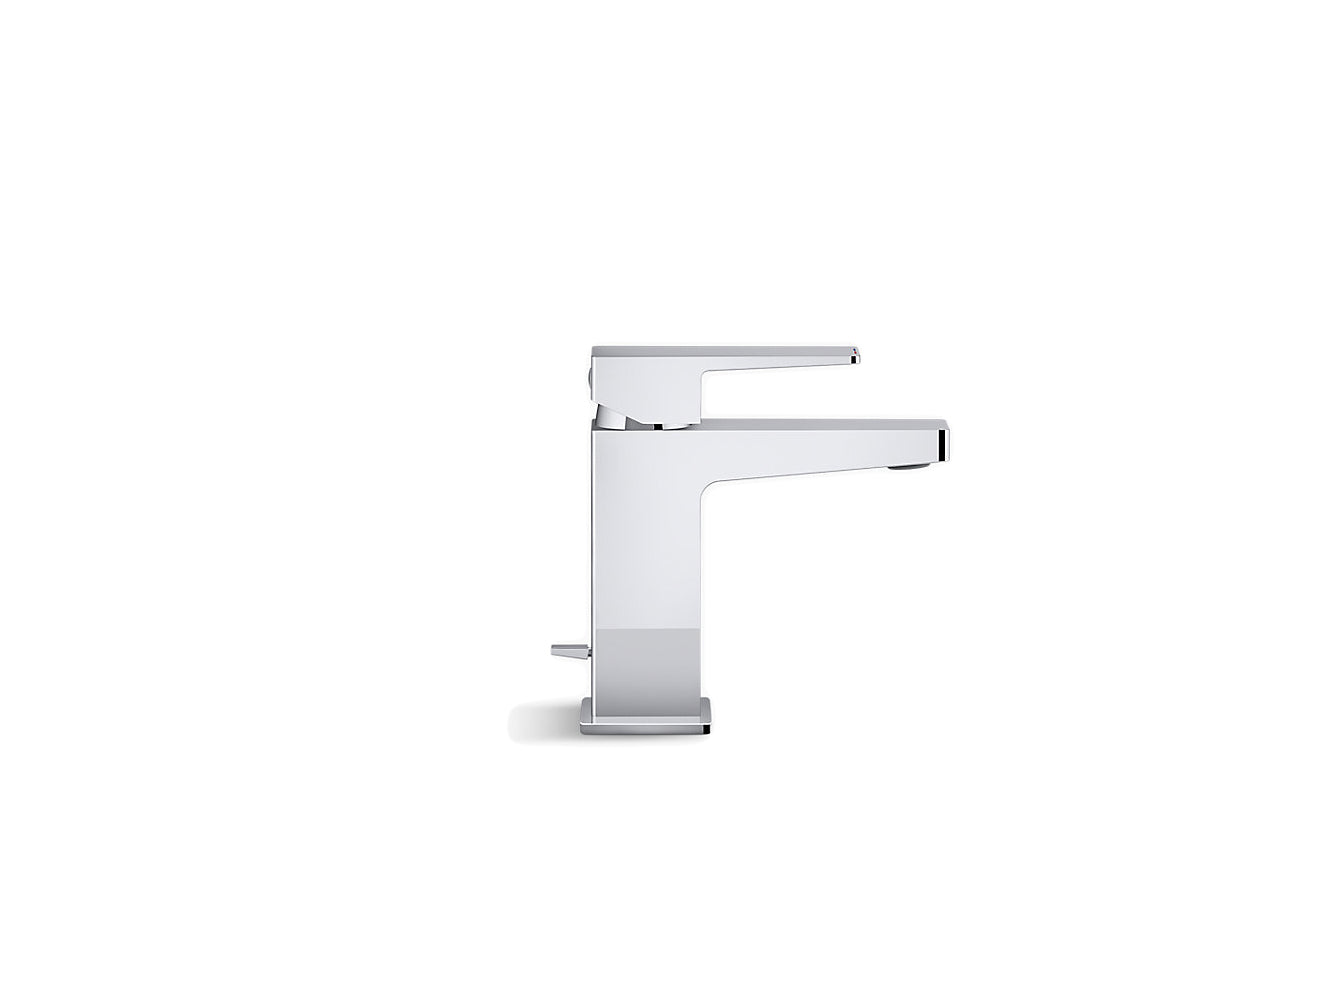 Kohler Honesty Single Handle Bathroom Sink Faucet 1.2 GPM - Chrome